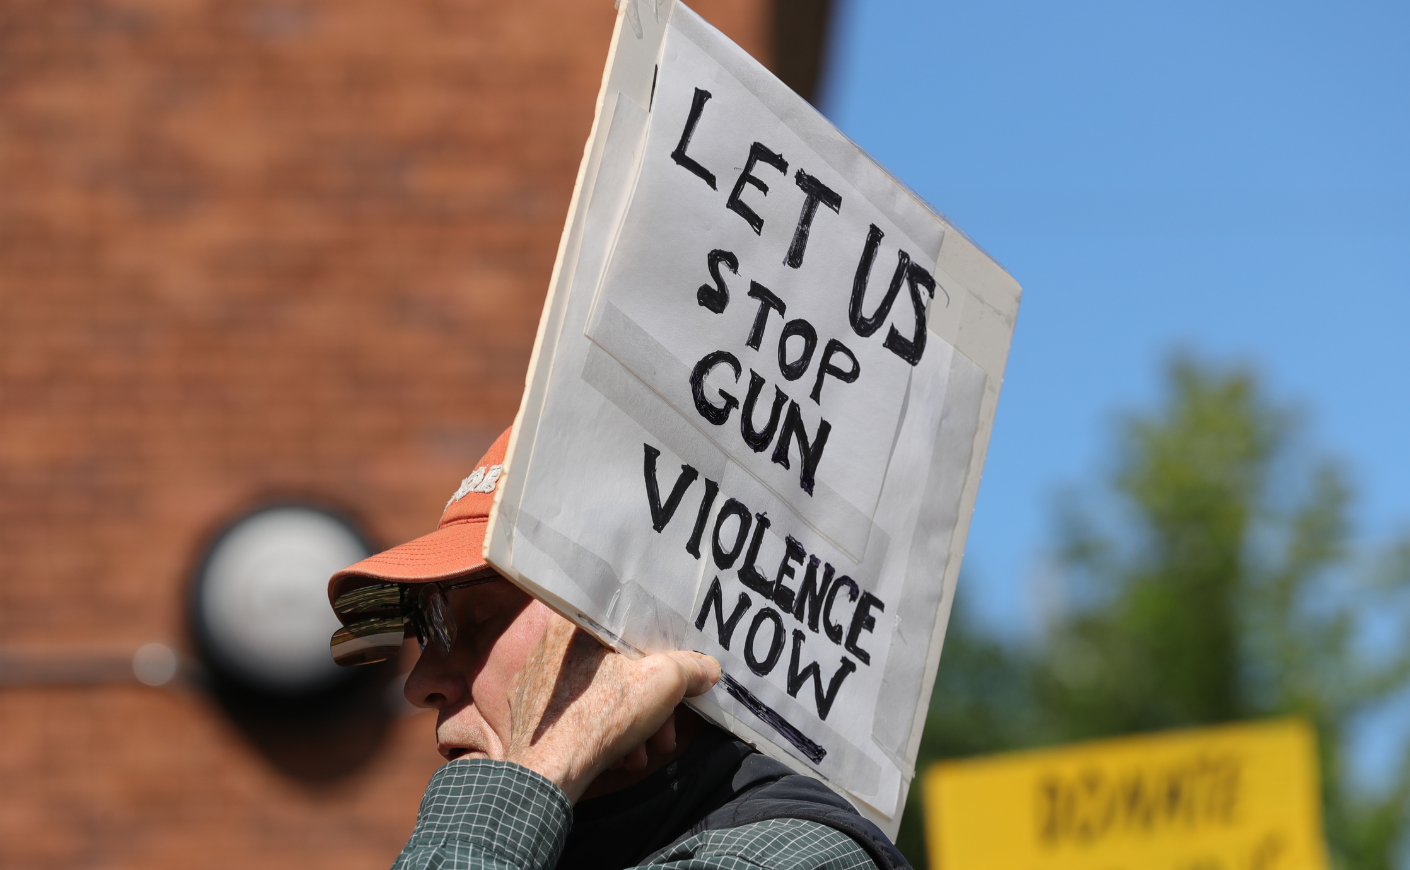 protest sign for gun violence